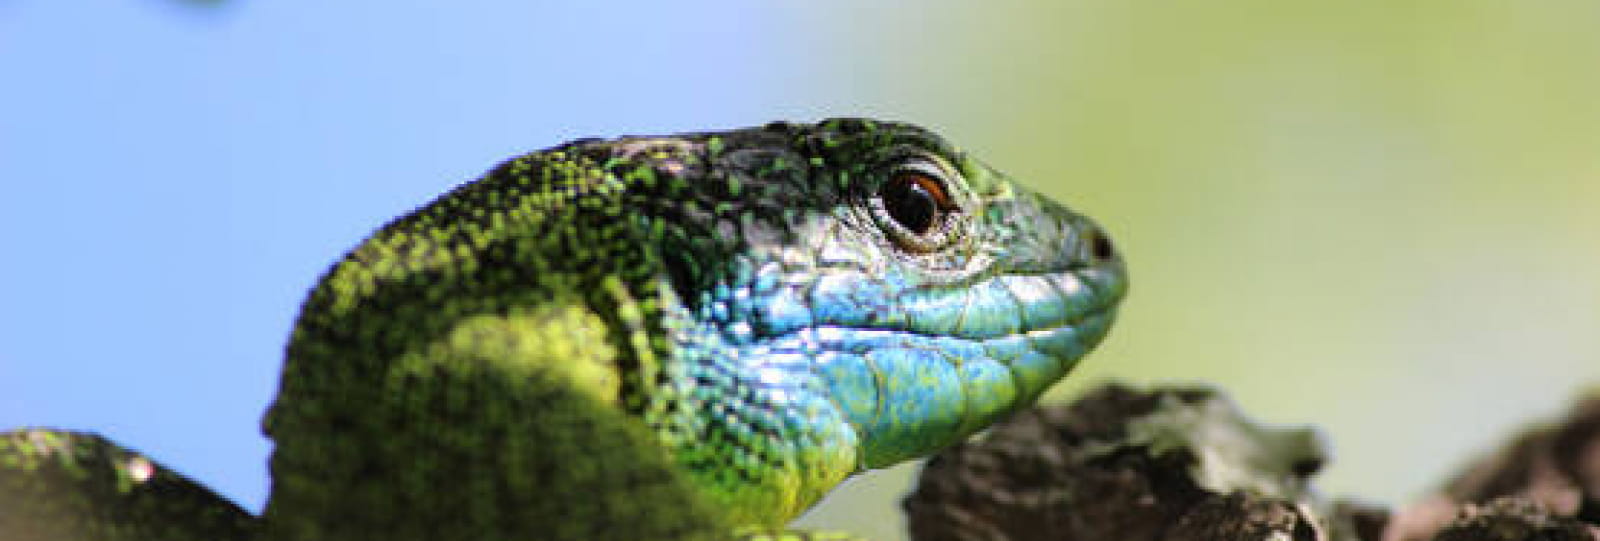 Balade naturaliste reptile